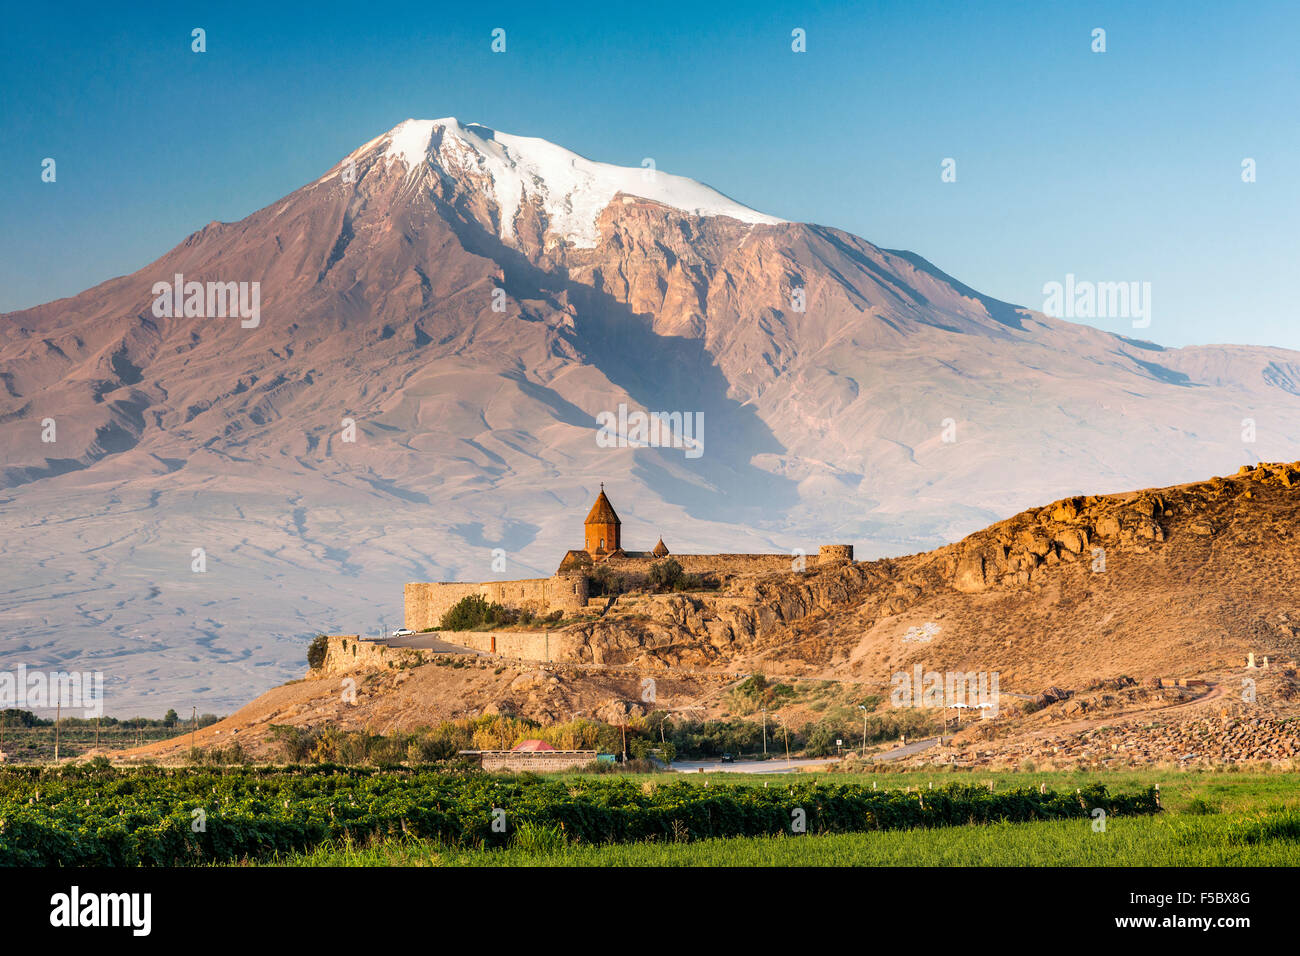 Khor Virap monastery in Armenia and Mount Ararat in Turkey. Stock Photo